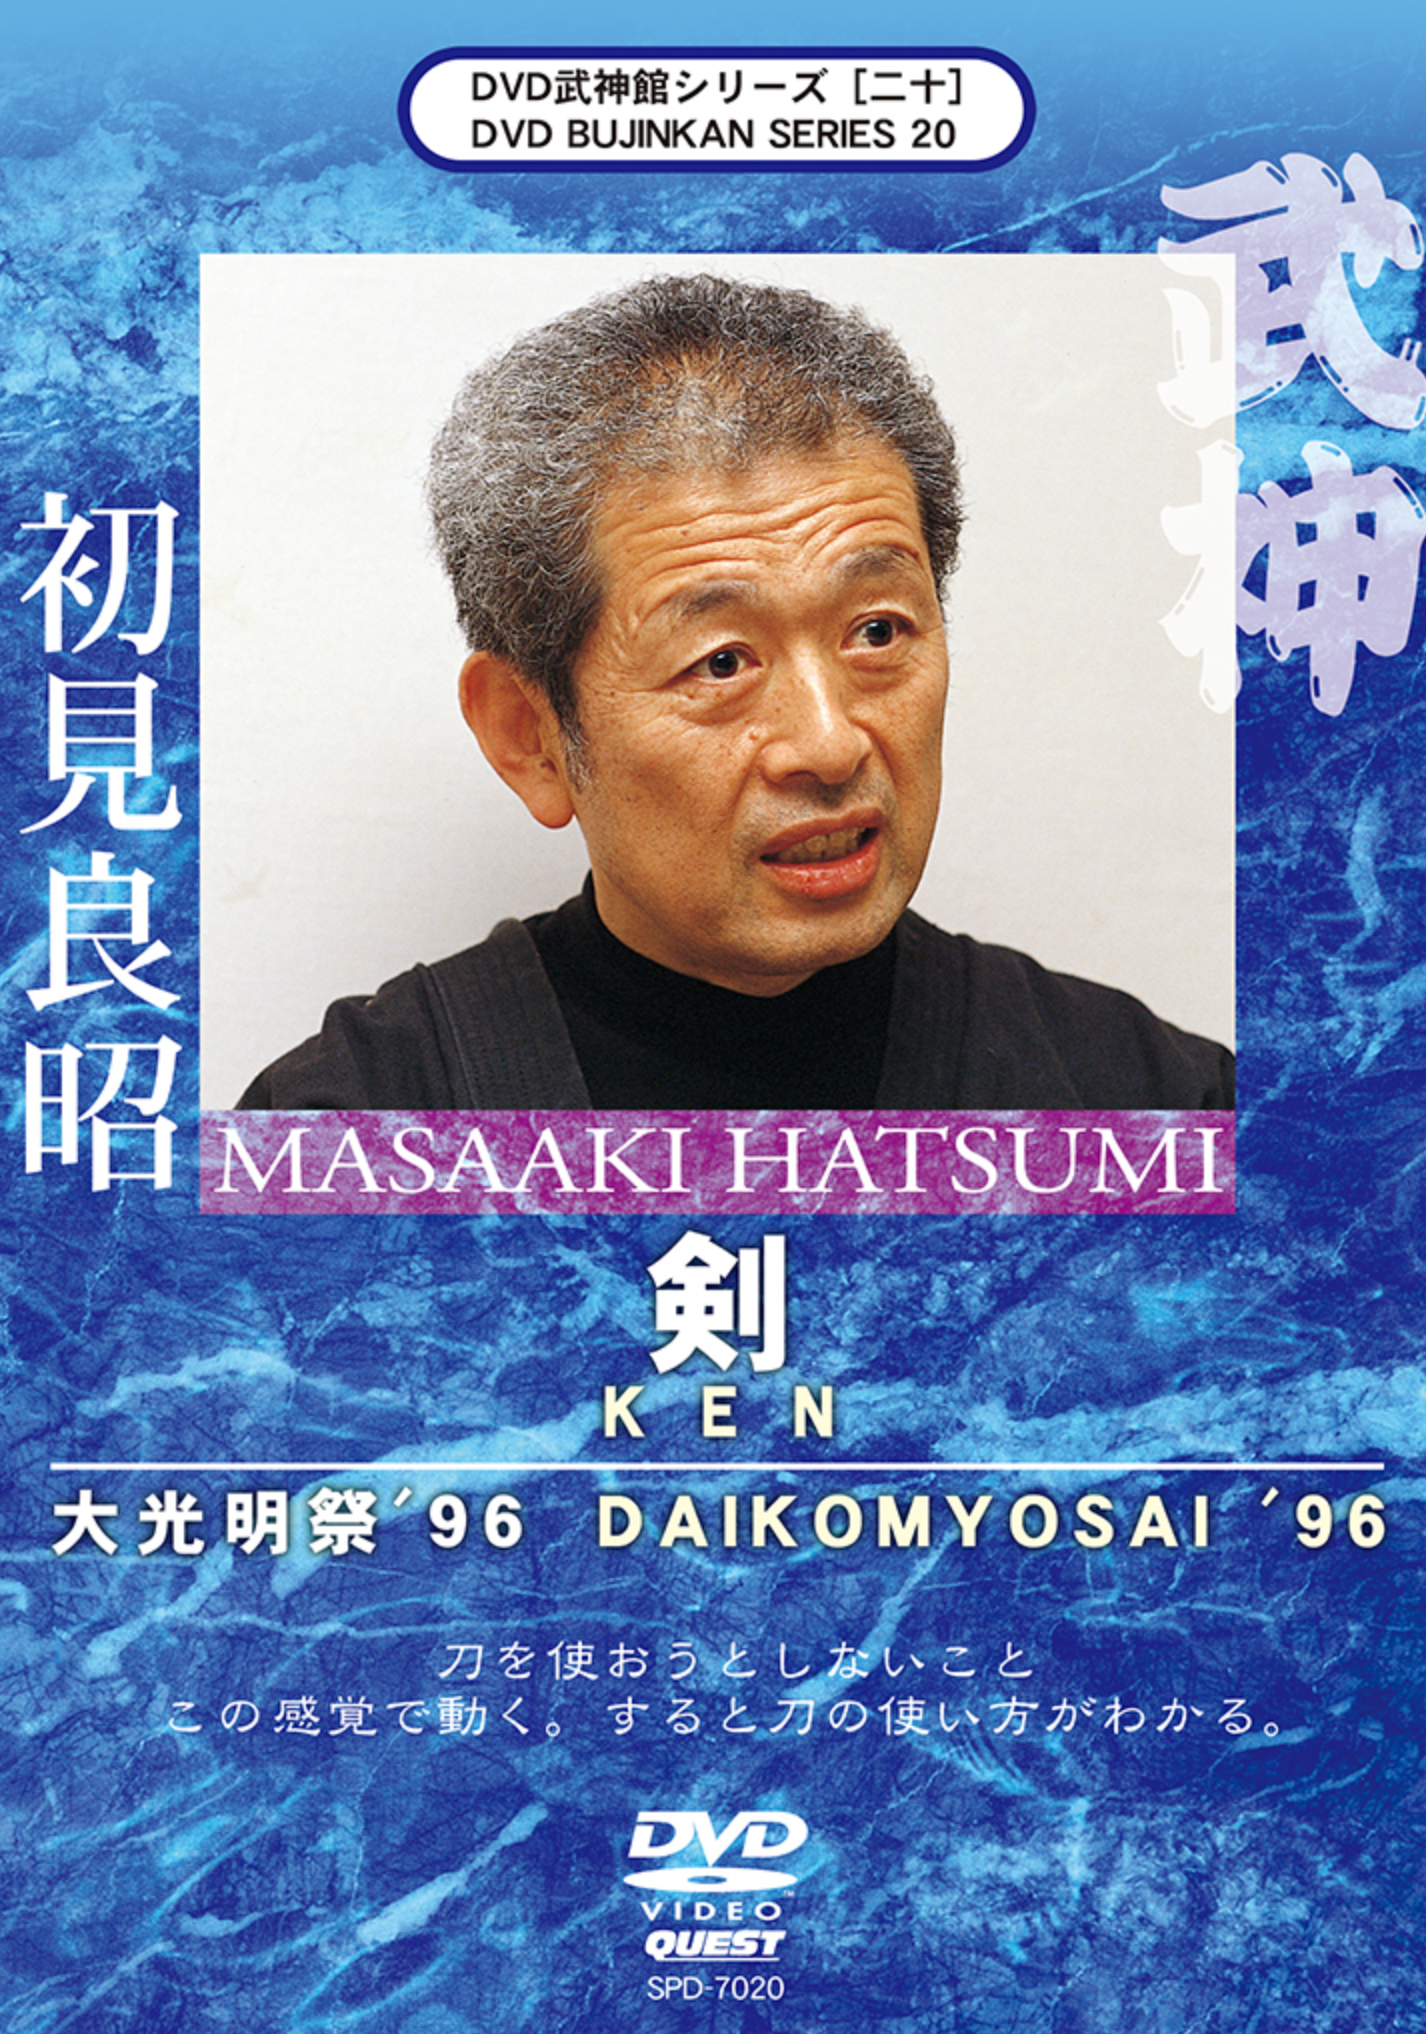 Bujinkan DVD Series 20: Ken with Masaaki Hatsumi - Budovideos Inc